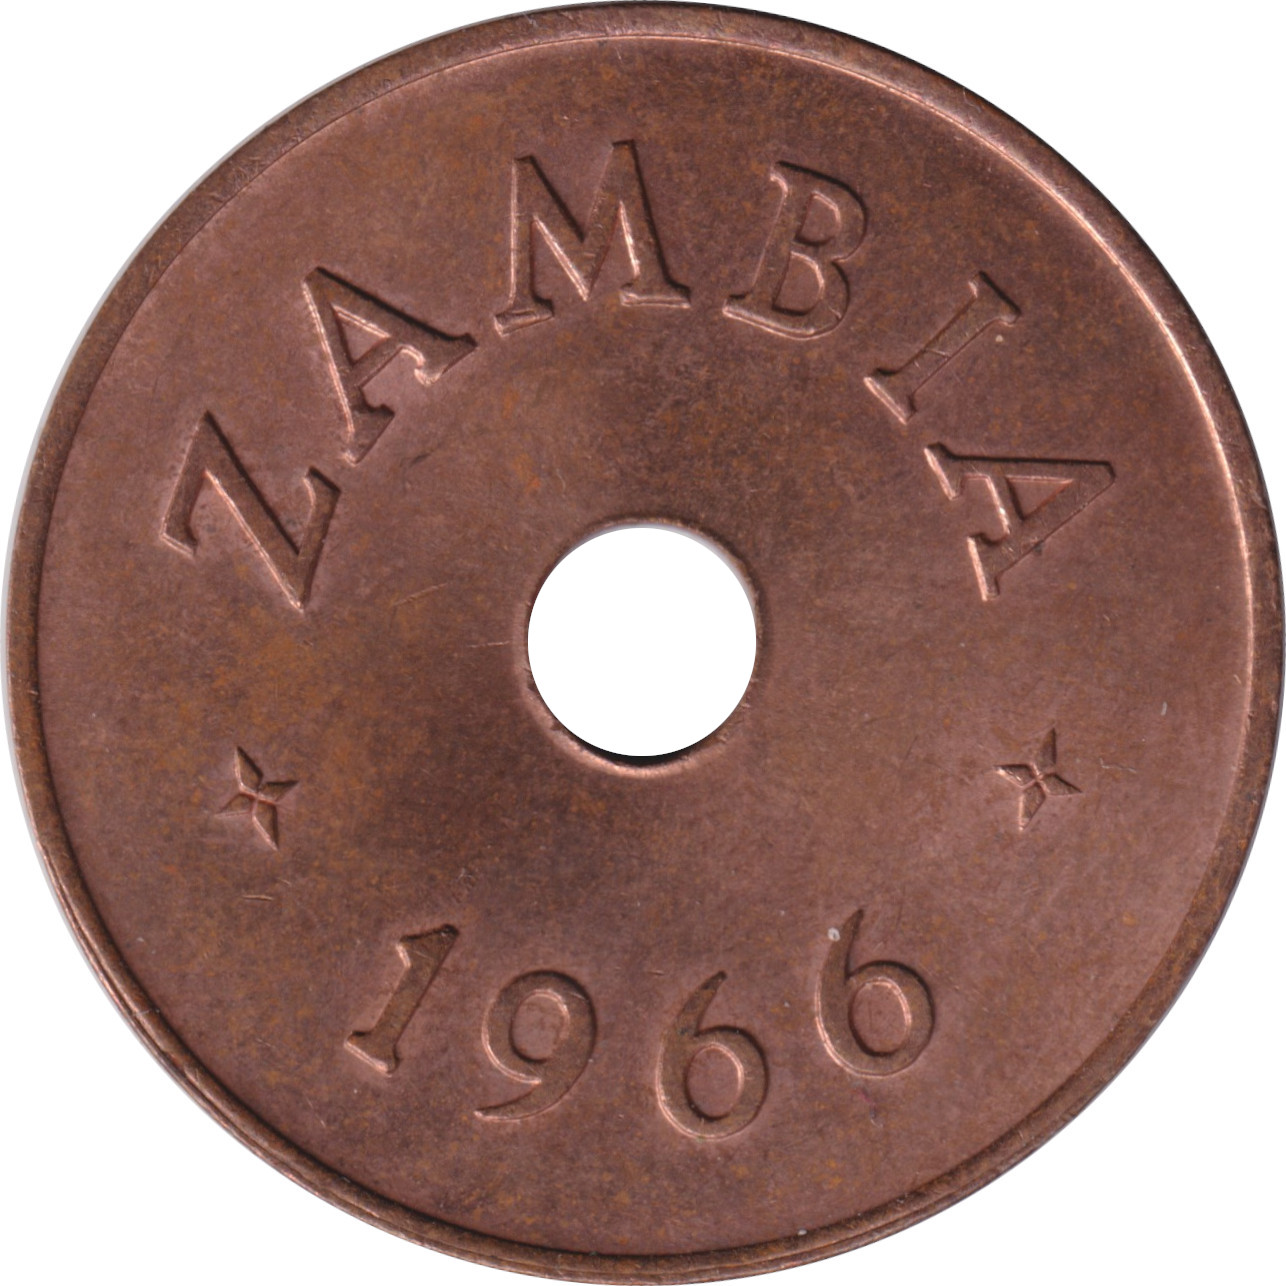 1 penny - Zambia